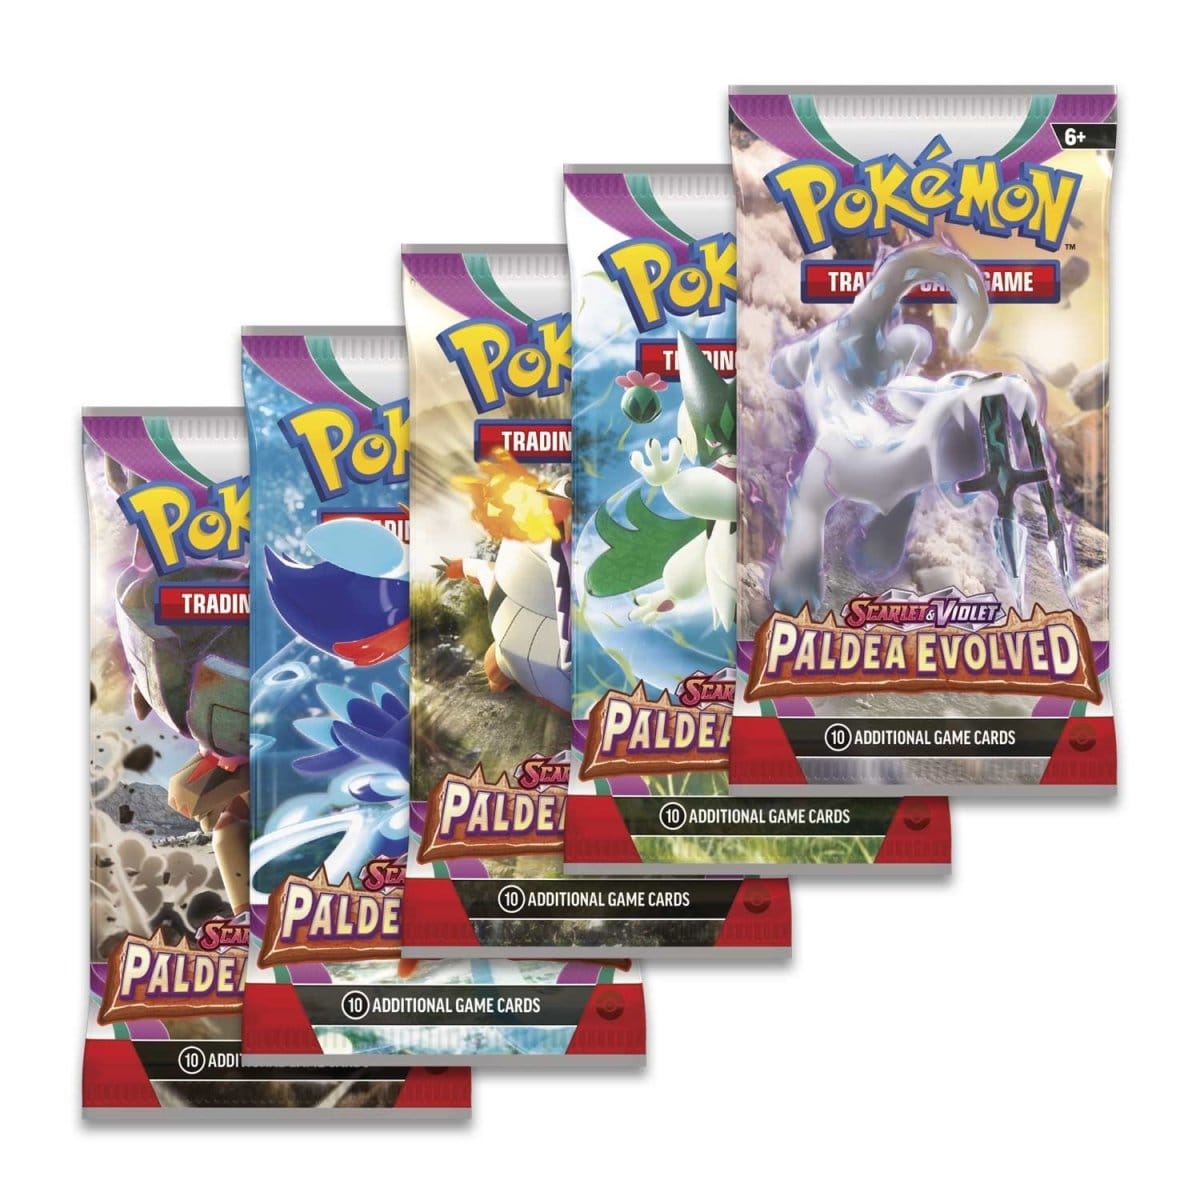 Pokemon Trading Card Games Pokémon: Scarlet & Violet - Paldea Evolved Build & Battle Box